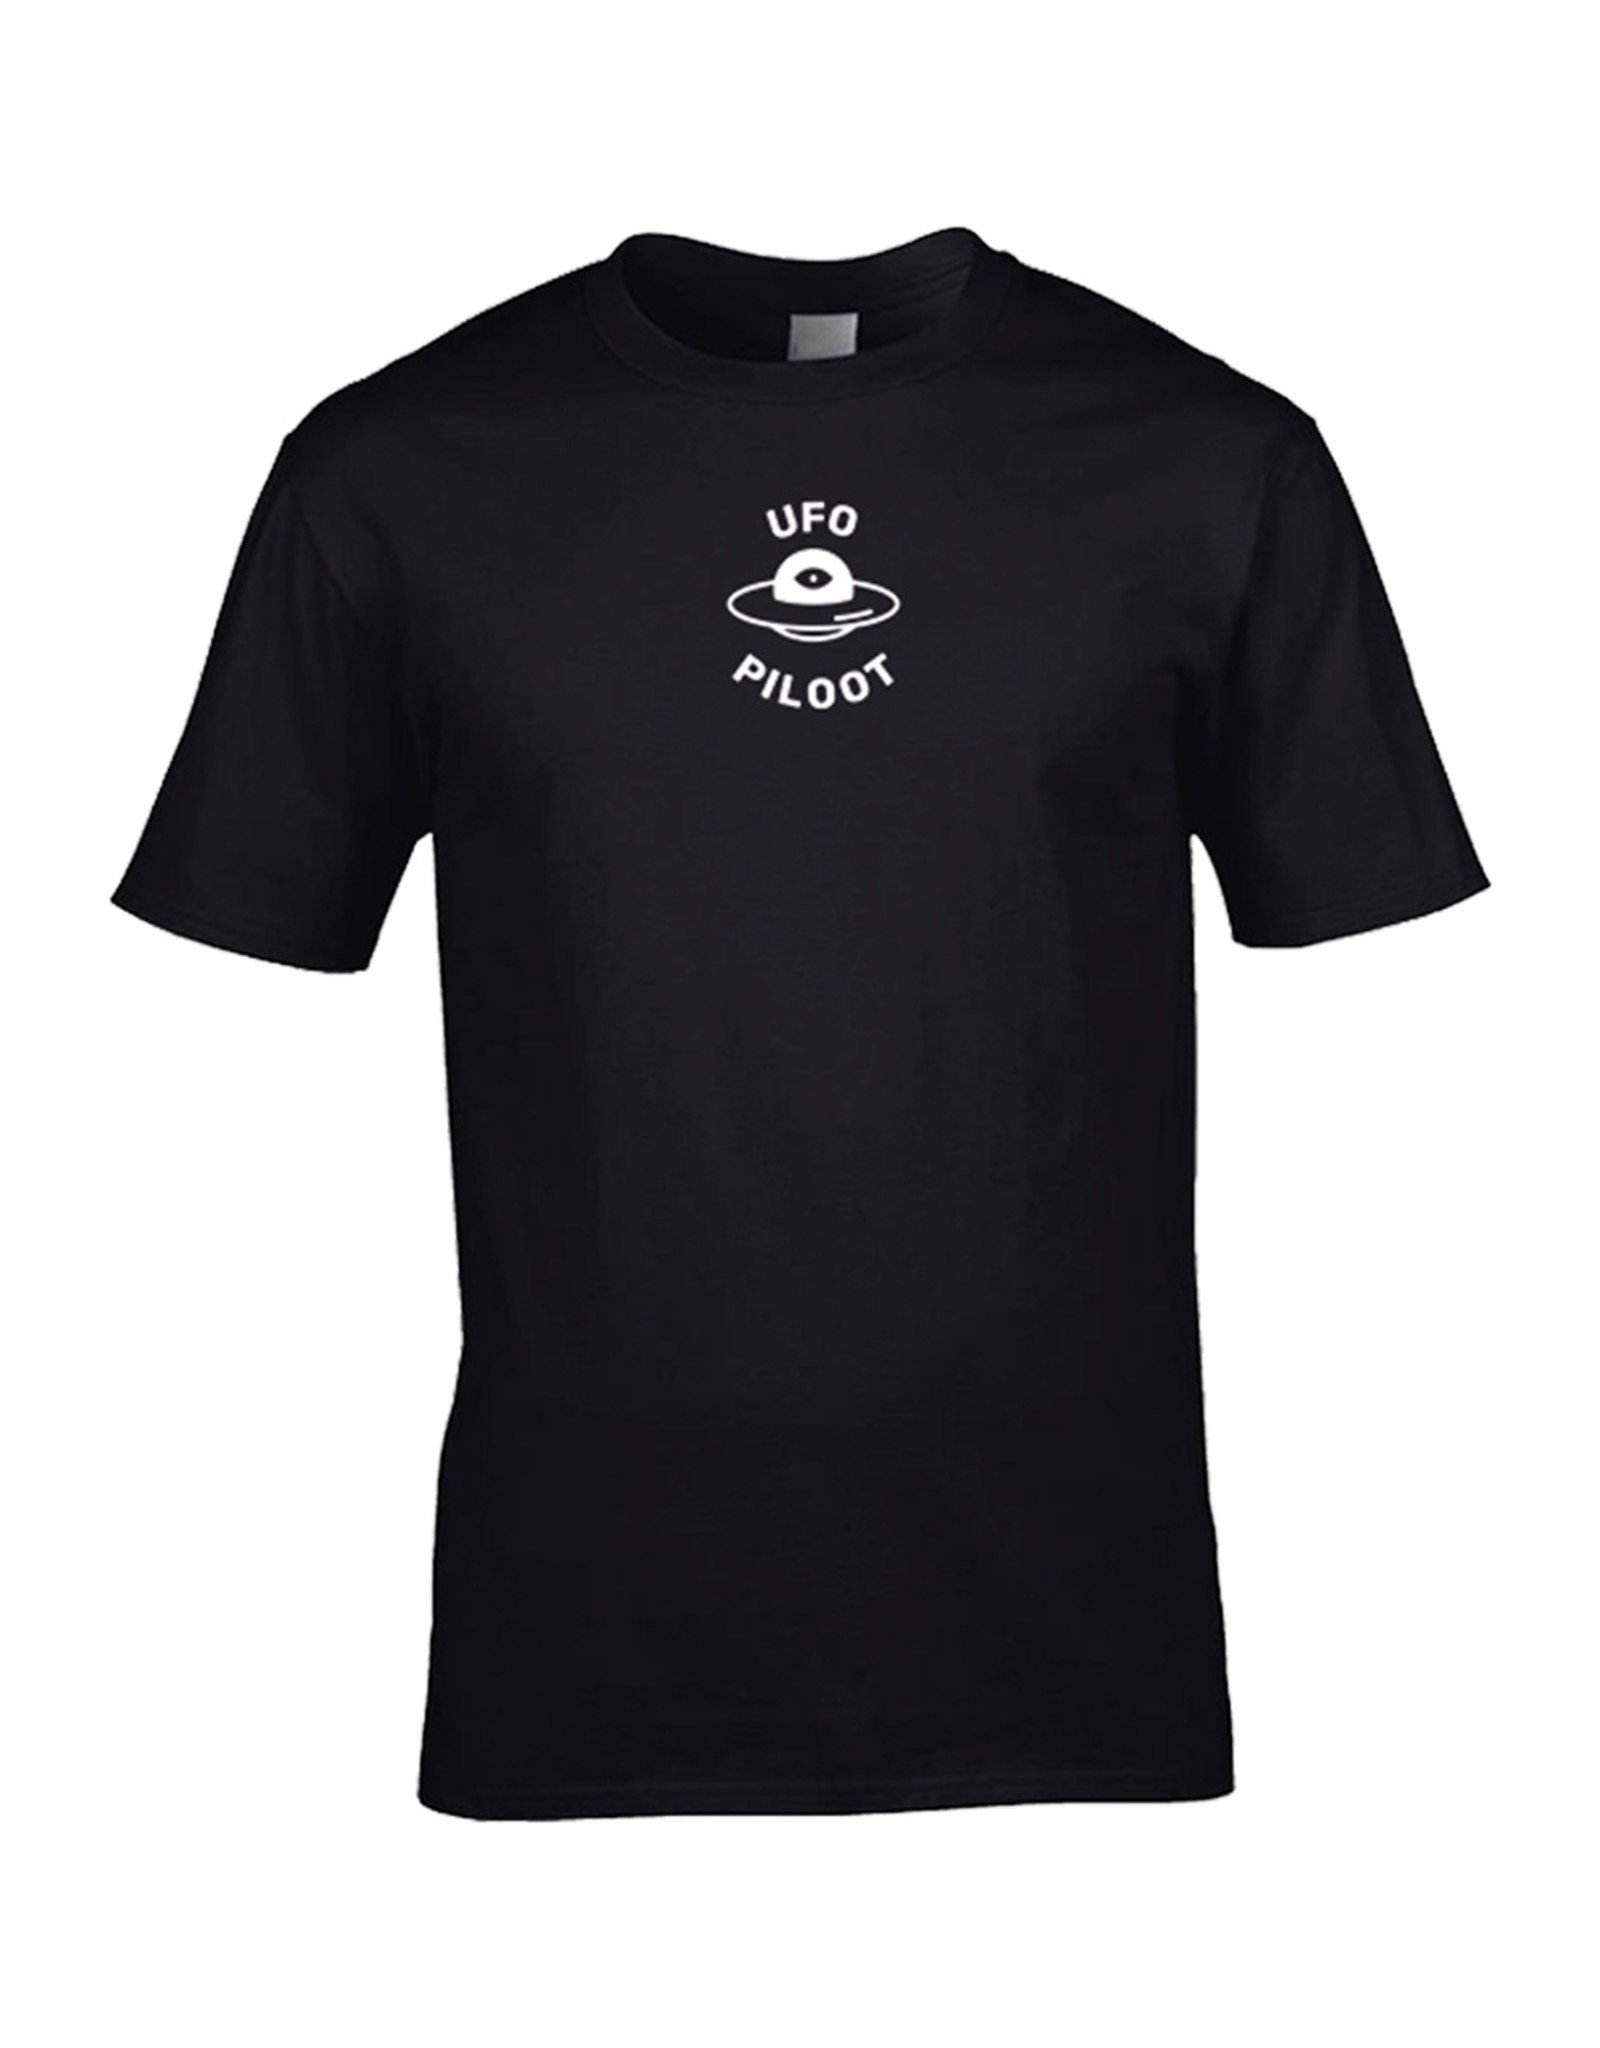 Festicap® T-Shirt UFO Piloot | Soft Cotton | Handmade by us